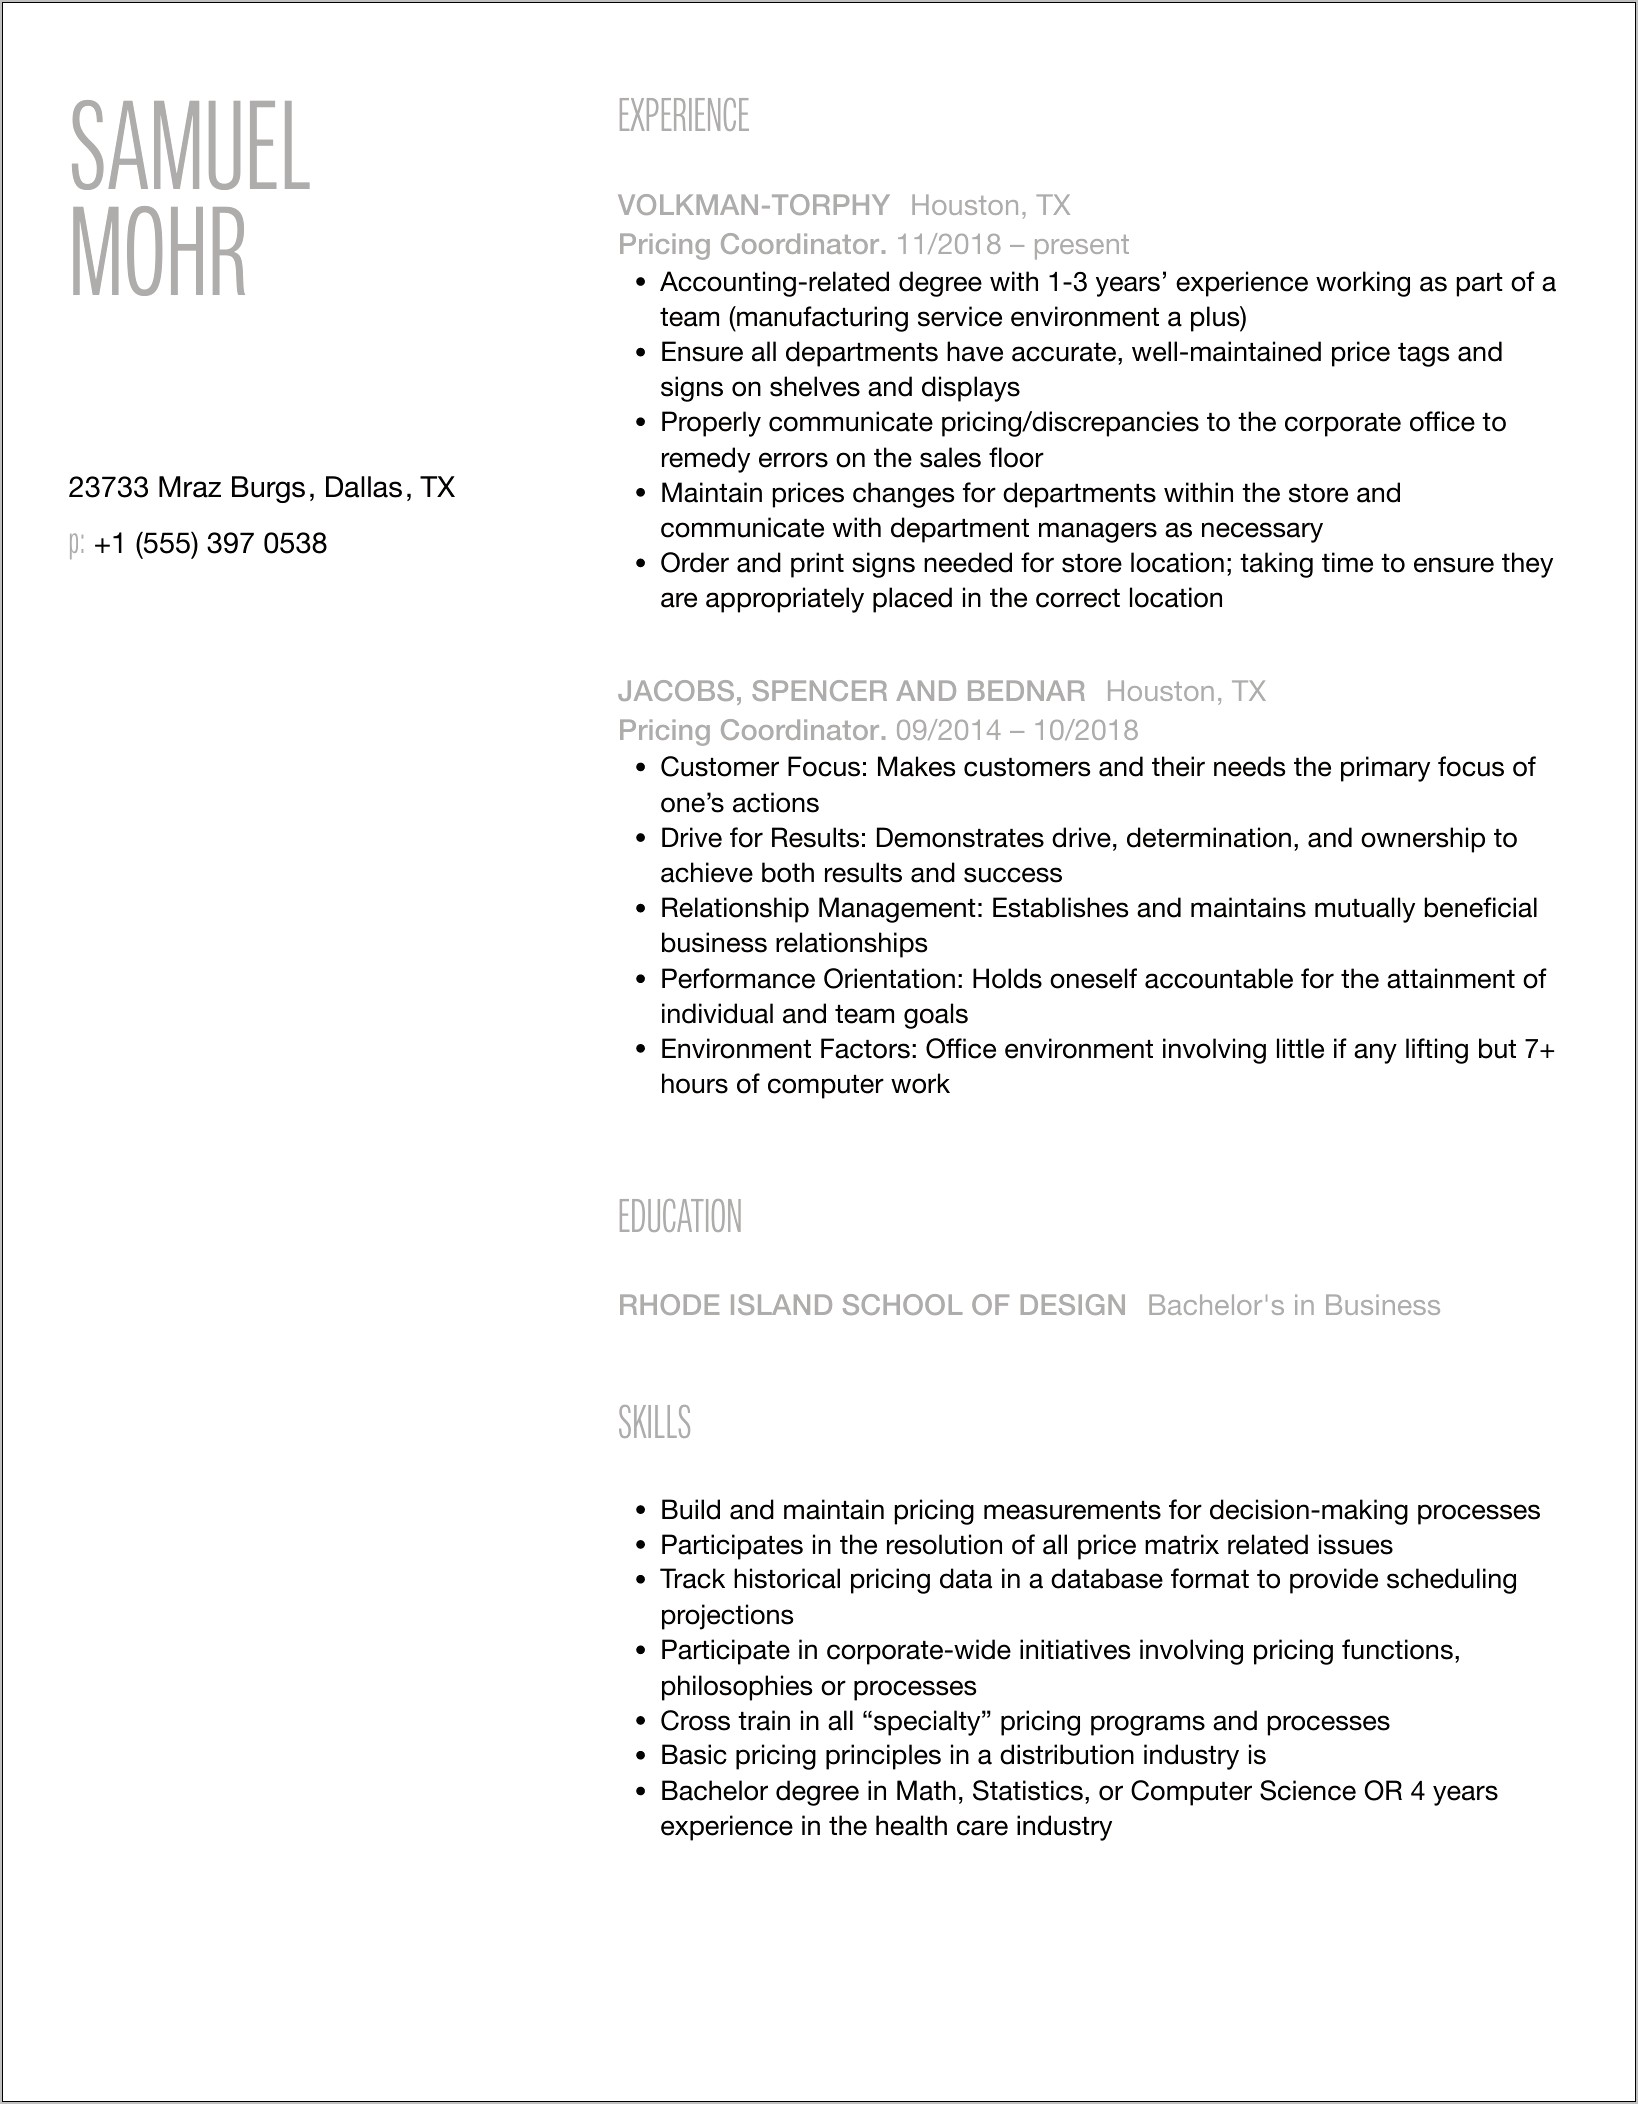 Pricing Coordinator Job Description Resume